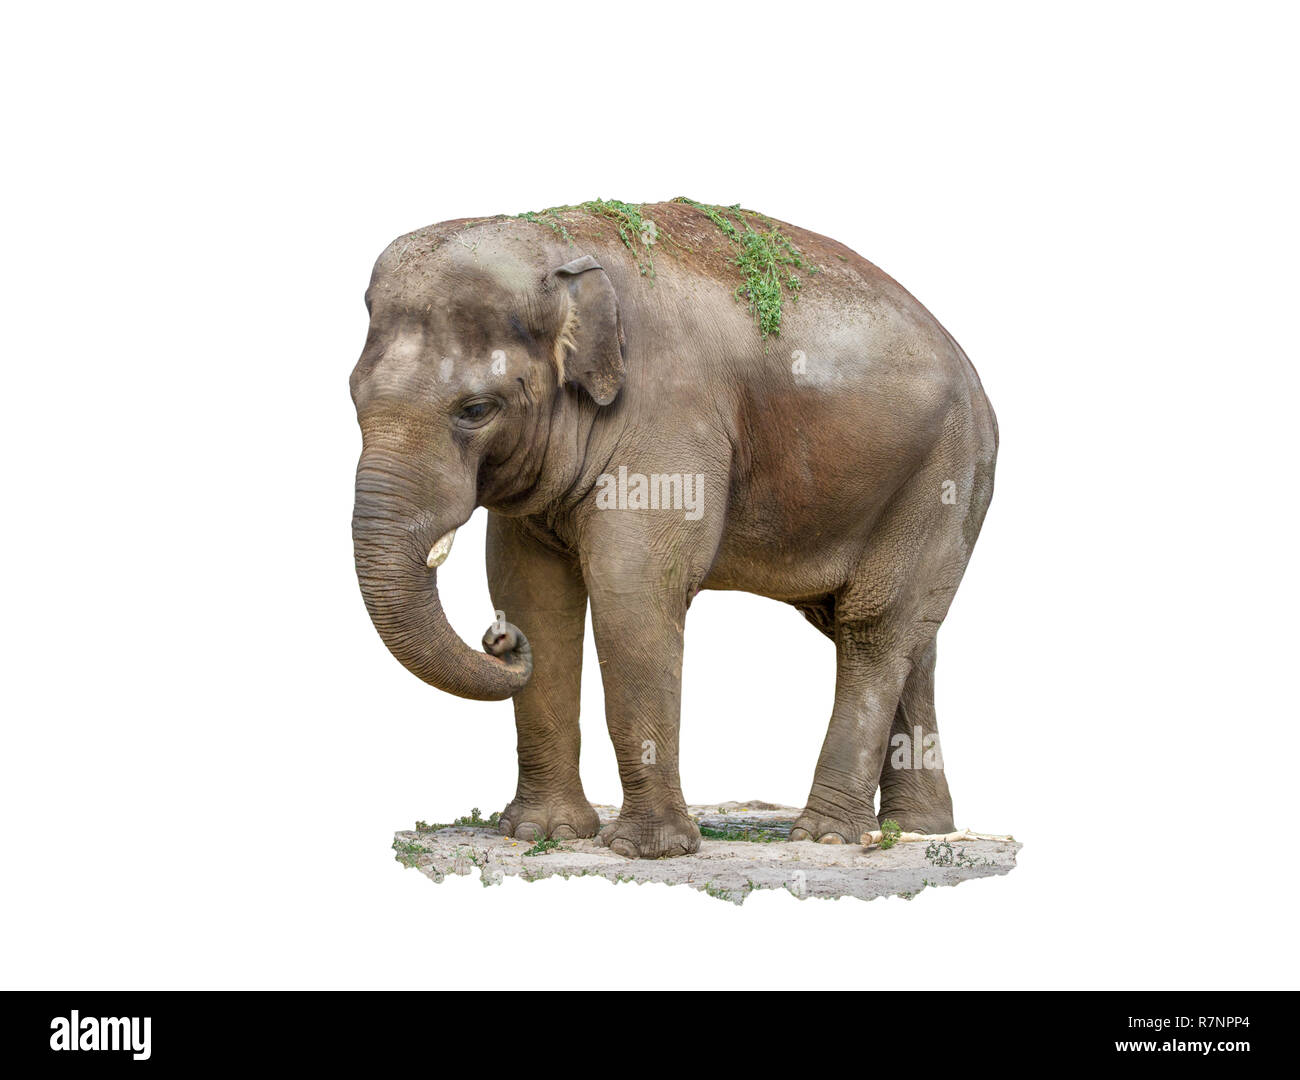 image of a big mammal animal elephant on a white background Stock Photo